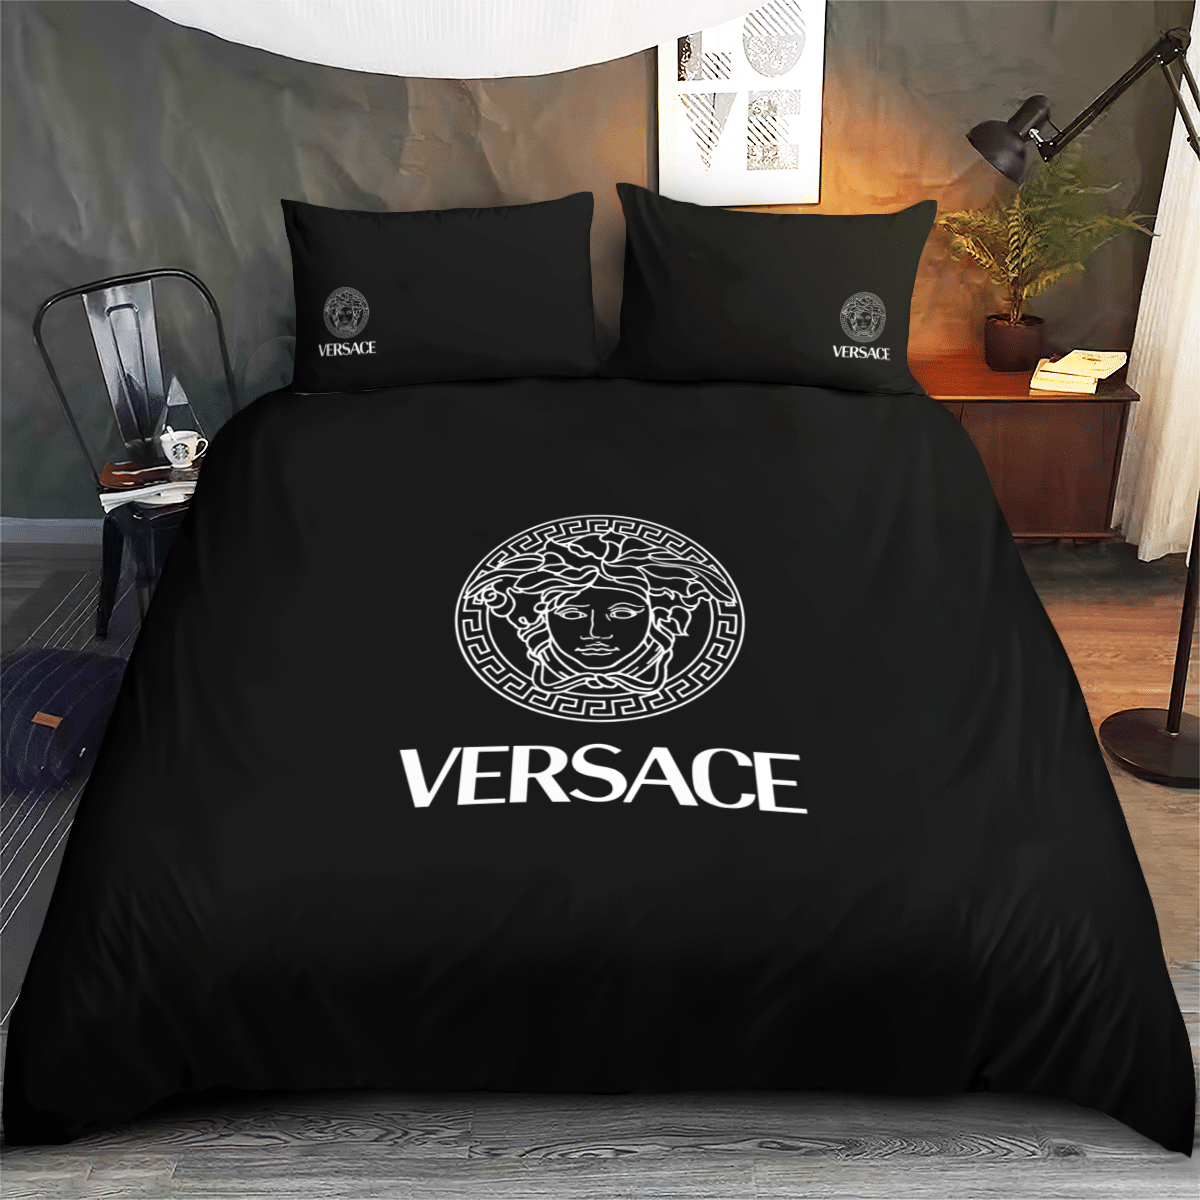 Versace Bedding Sets 07